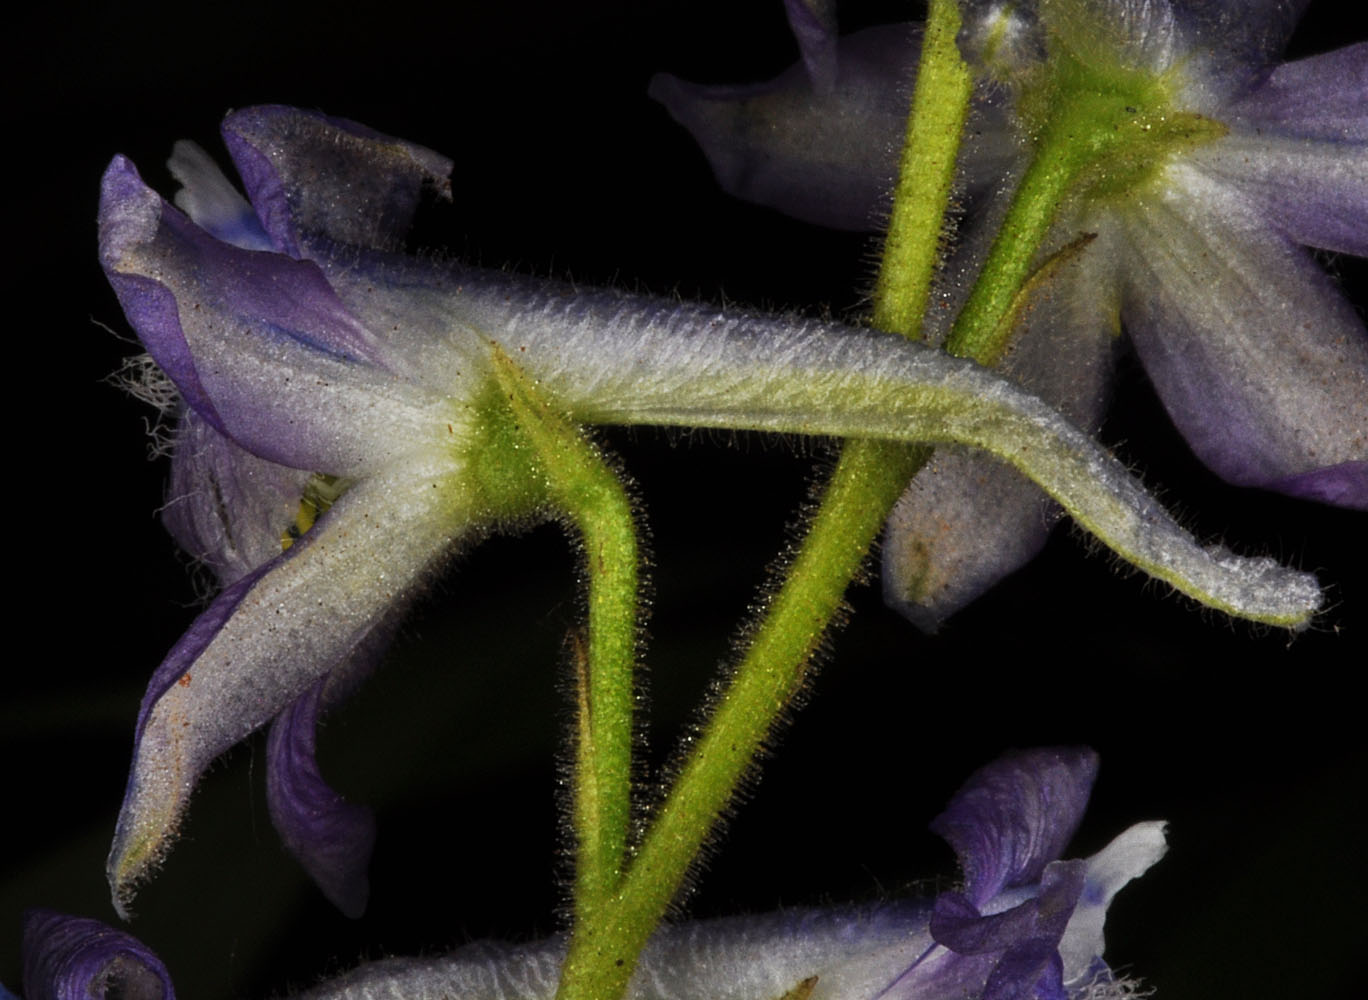 Flora of Eastern Washington Image: Delphinium multiplex